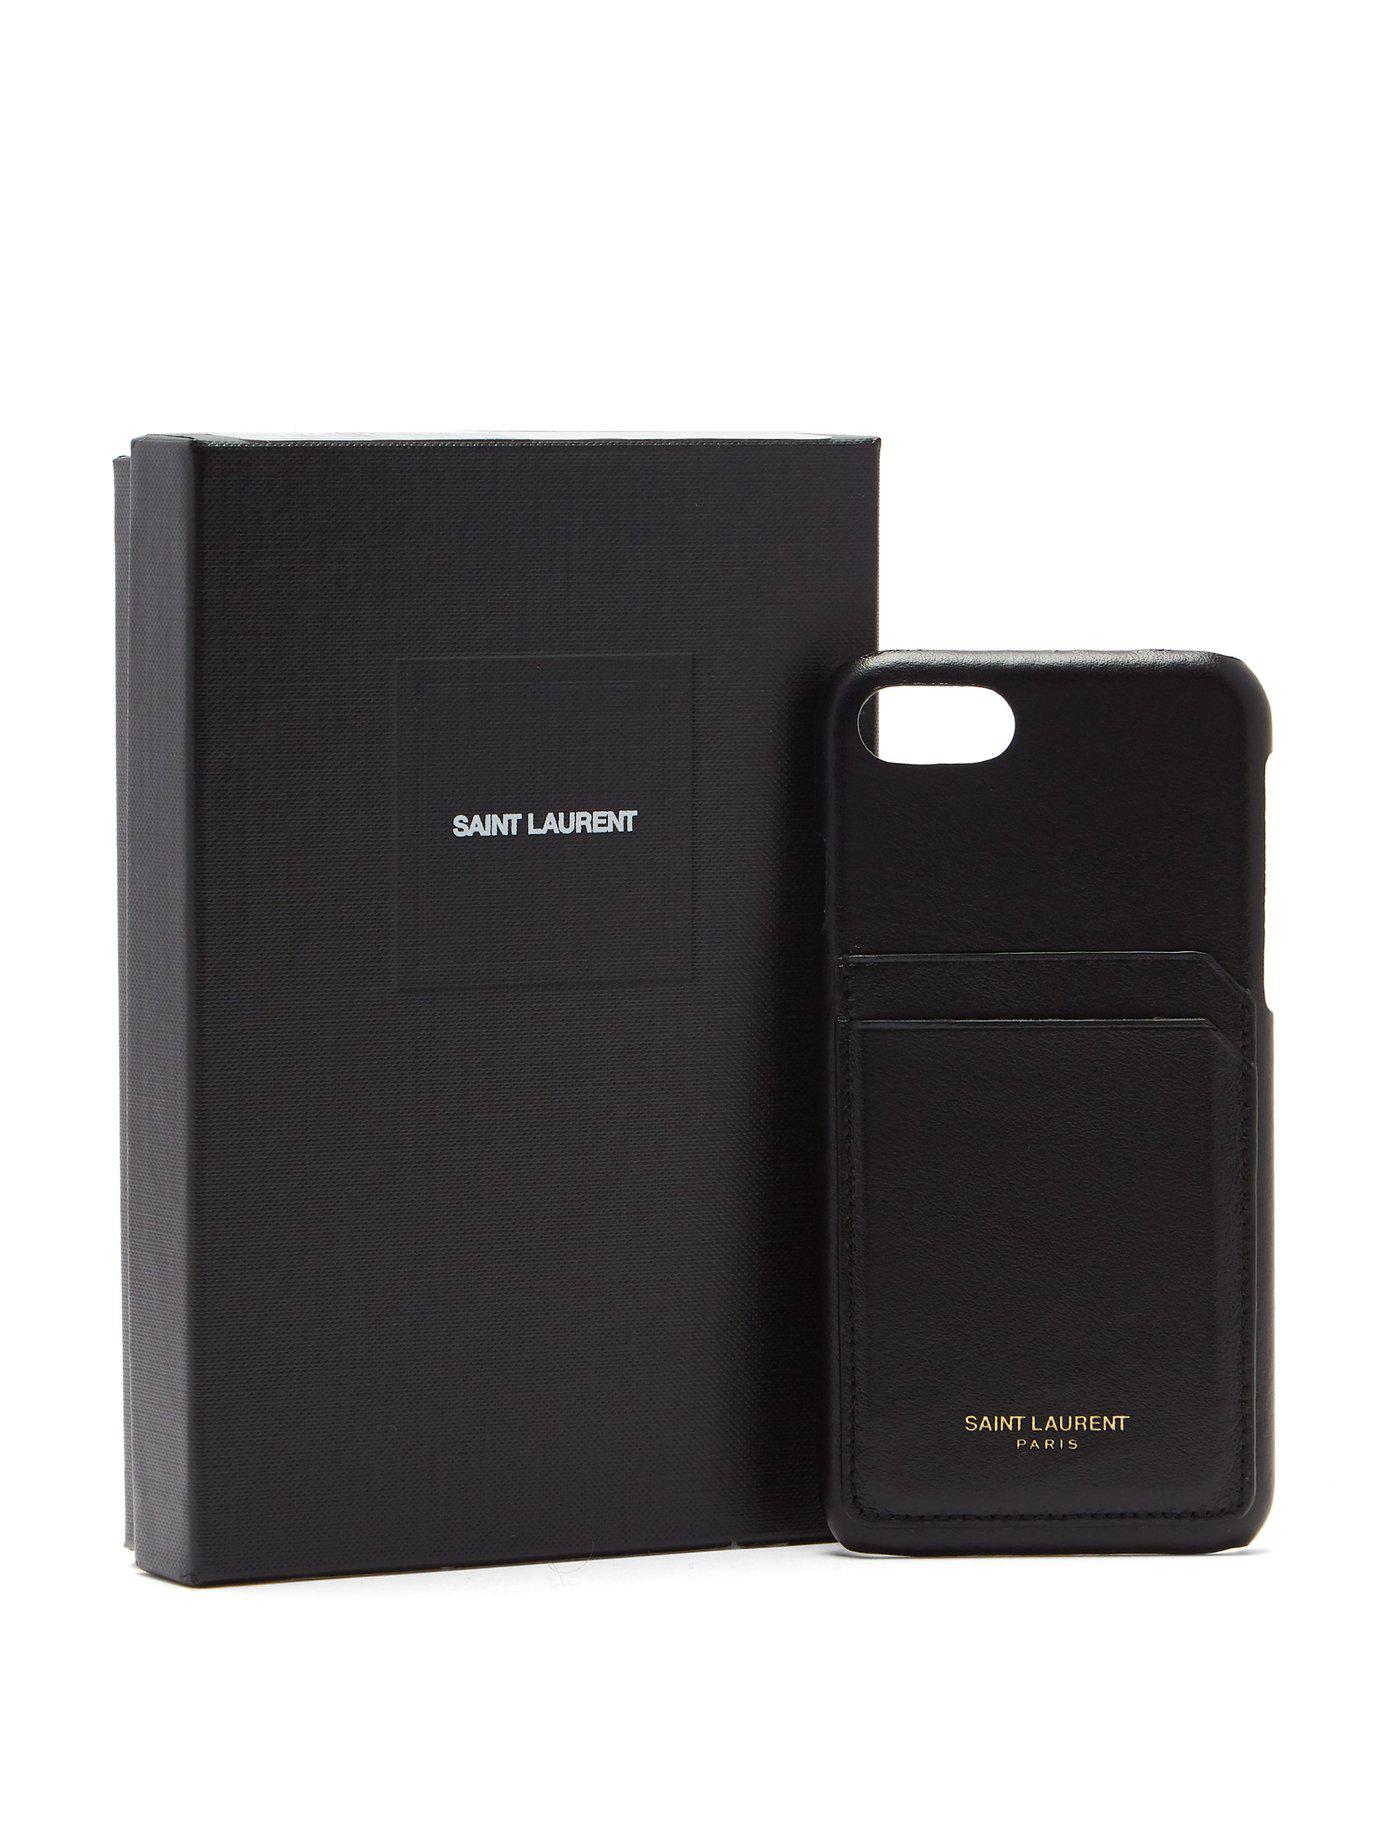 Saint Laurent Iphone® 8 Leather Phone Case in Black - Lyst